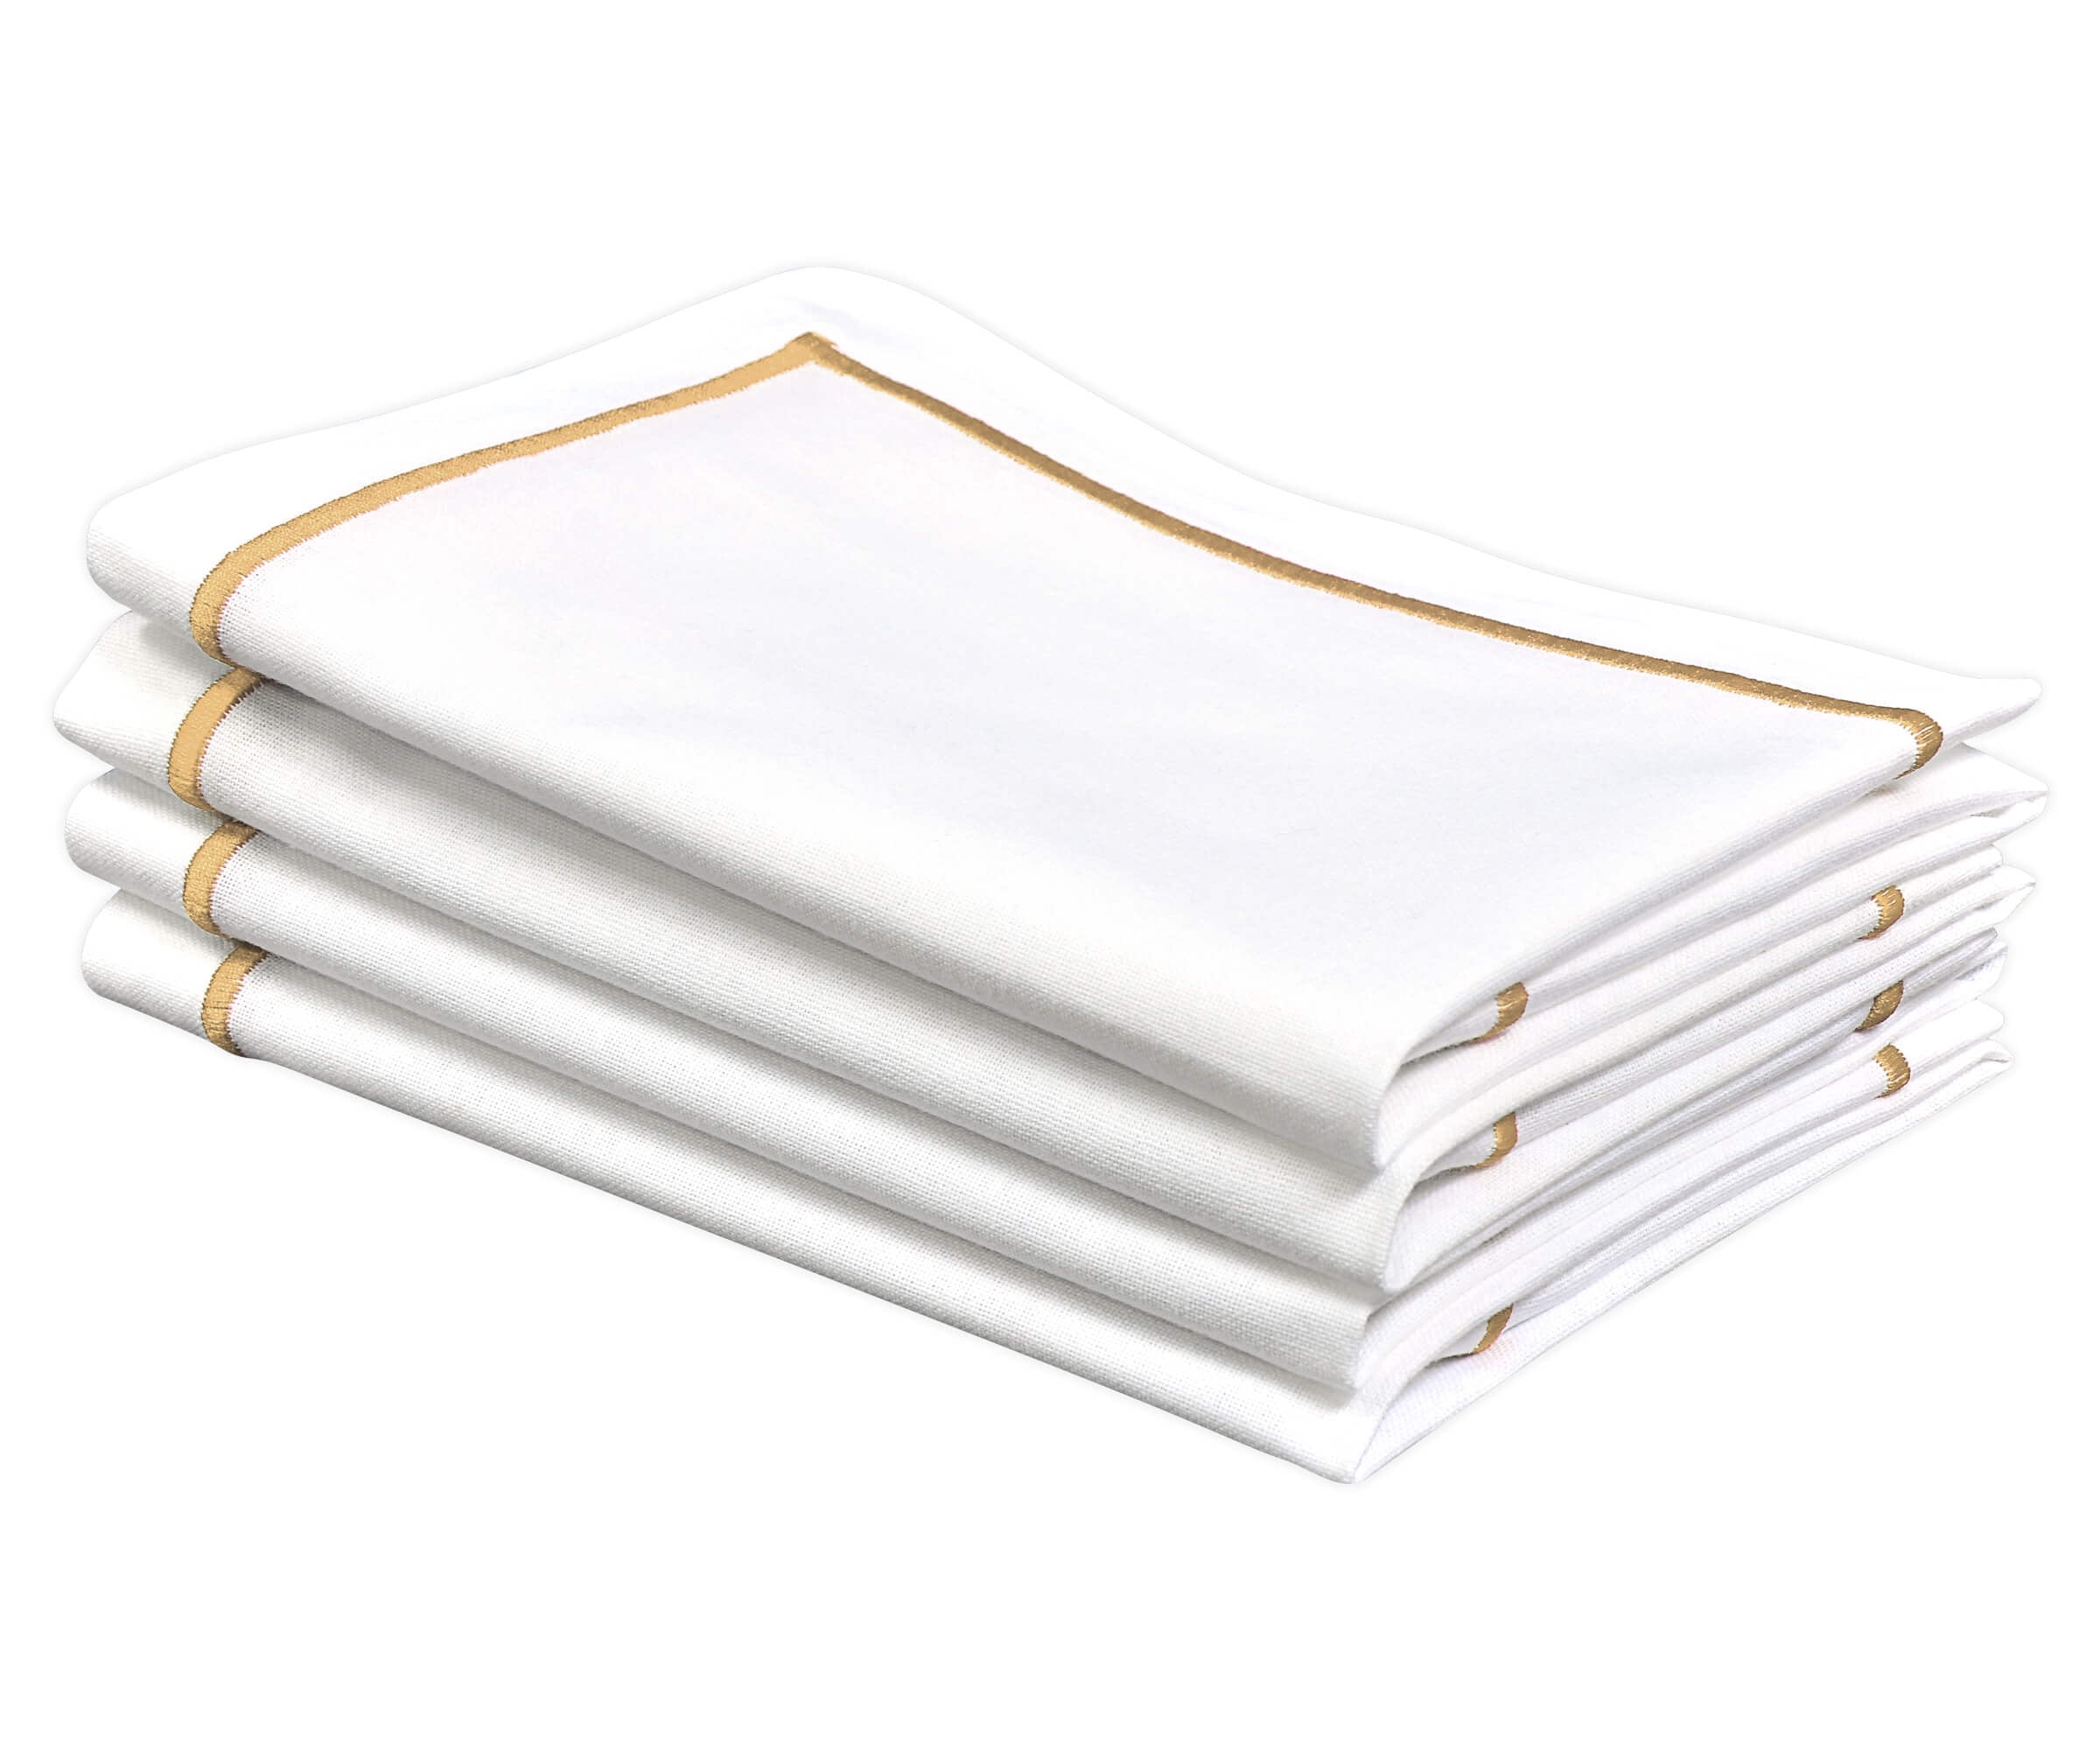 All Cotton and Linen Cotton Napkins Set of 6, Cloth Napkins, Linen Dinner Napkins, 18x18 inch White Cloth Napkins, Bistro Striped Napkins, Beige